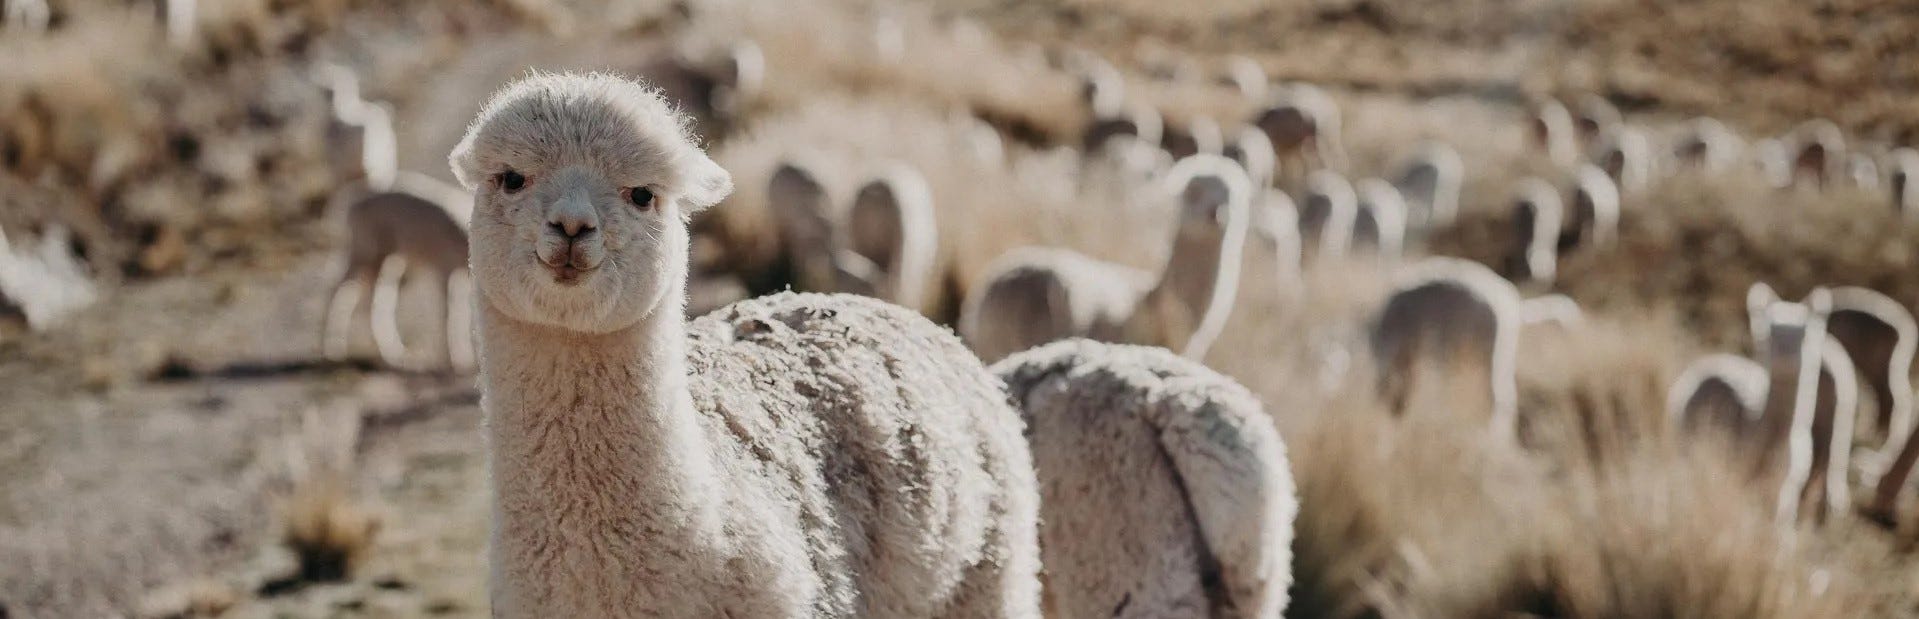 Merino Wool vs Alpaca Wool | A Comparison